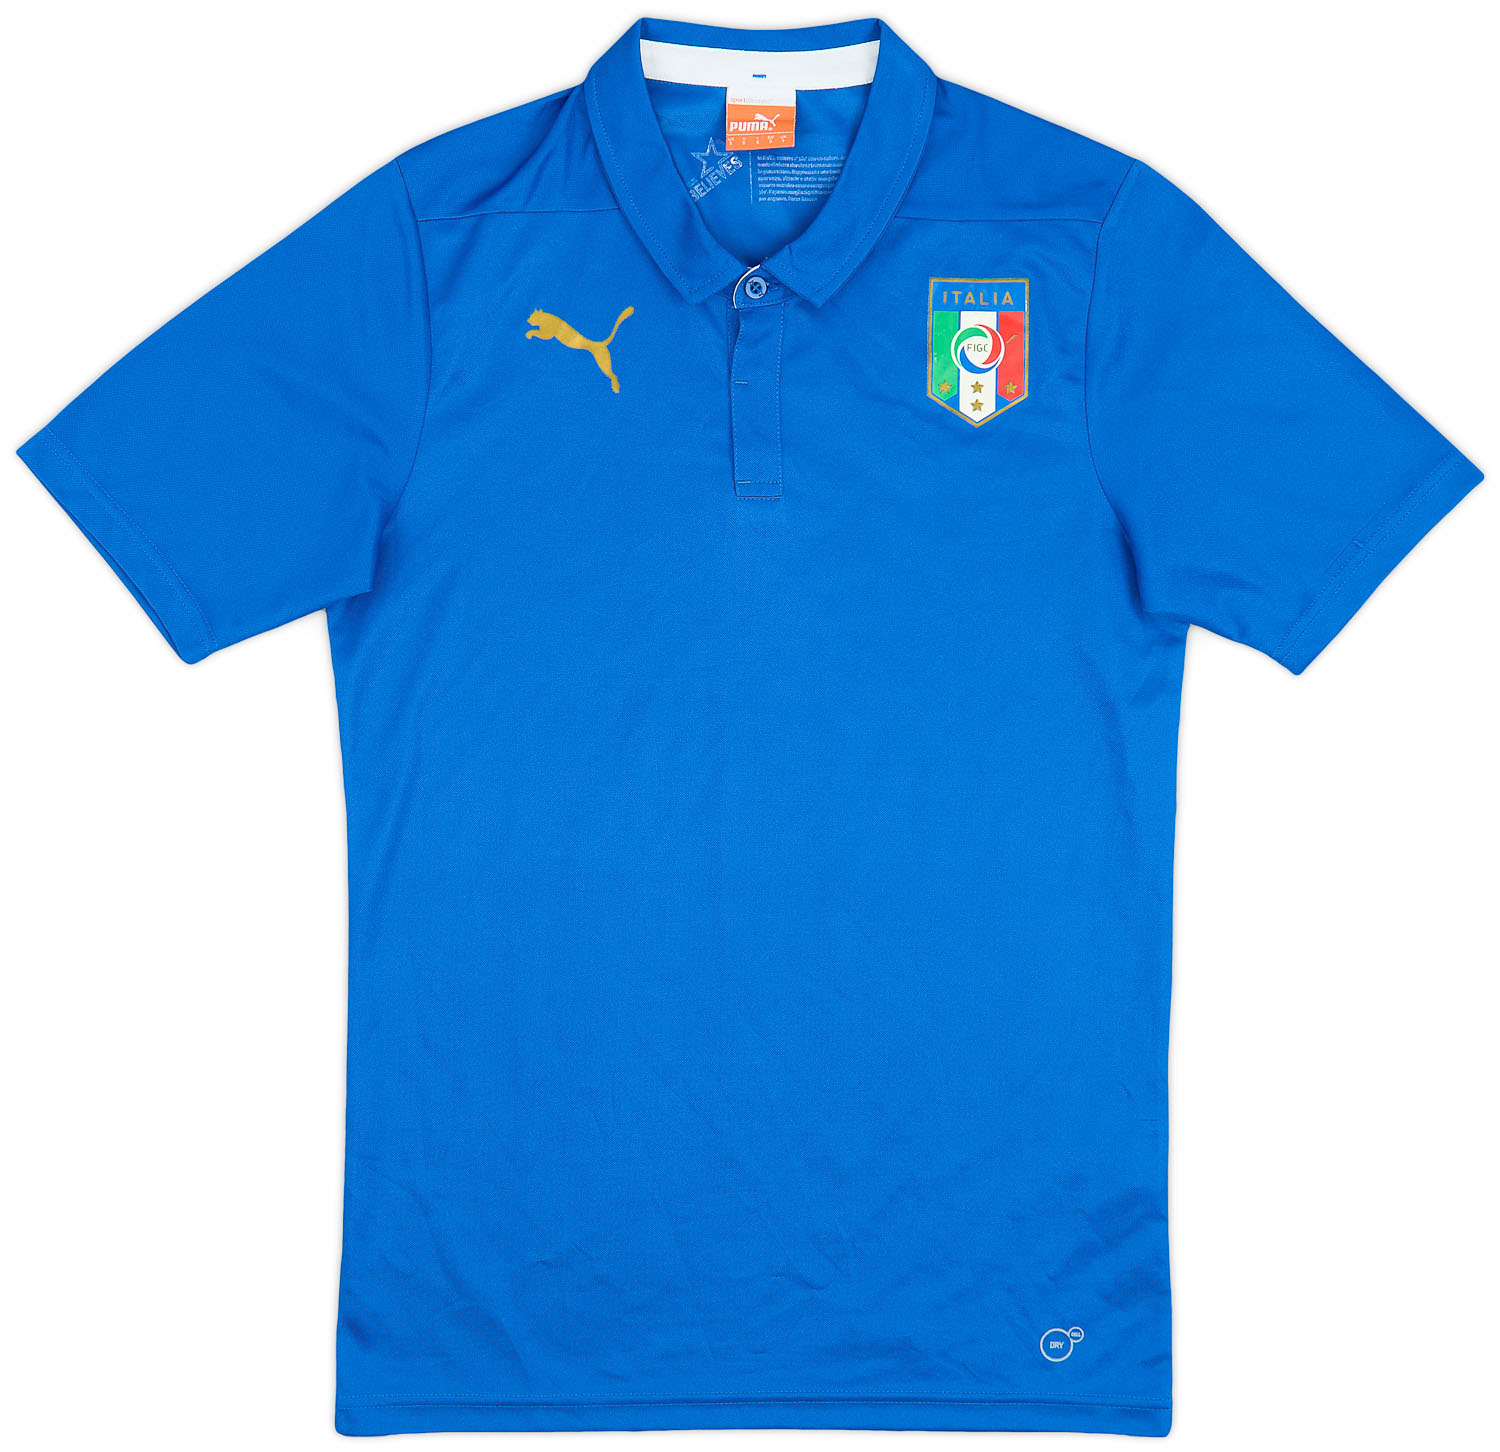 2014-15 Italy Basic Home Shirt - 8/10 - ()